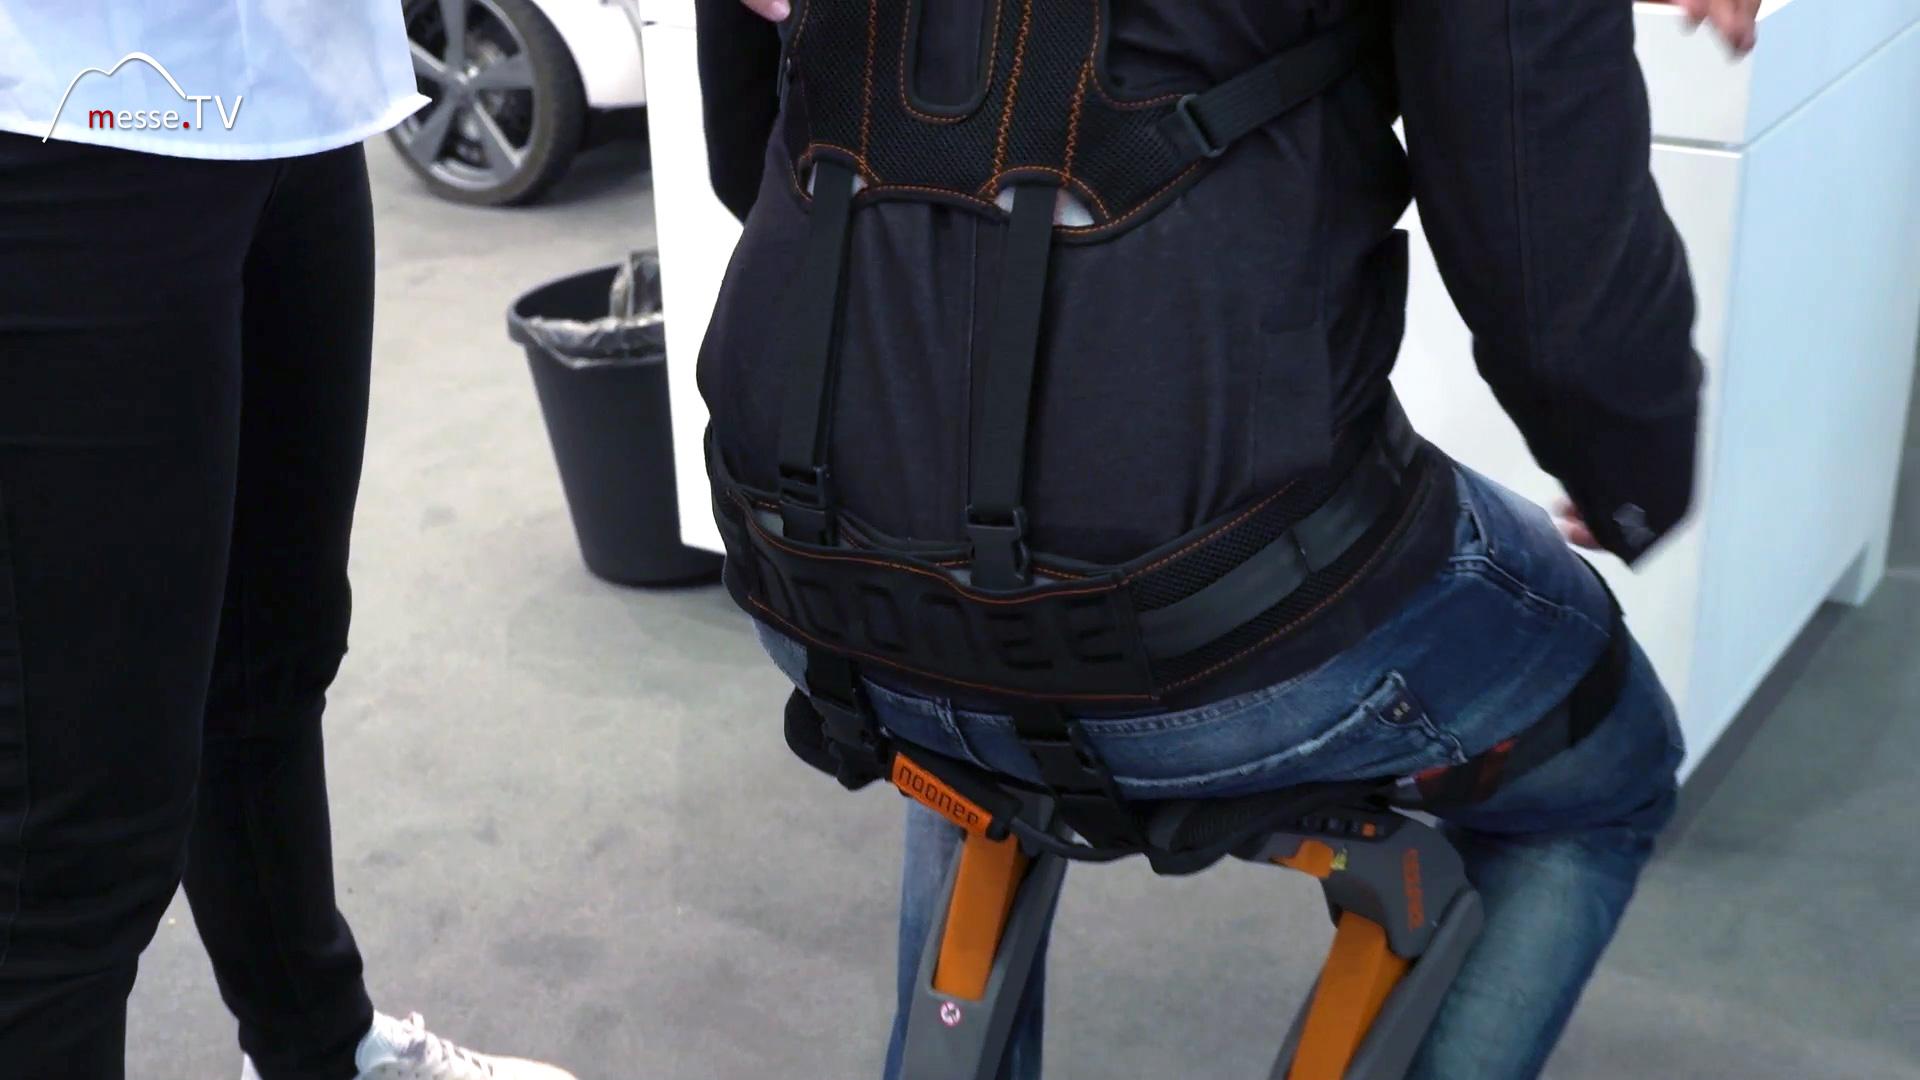 Exoskeleton Healthy Working Posture Chairless Chair noonee